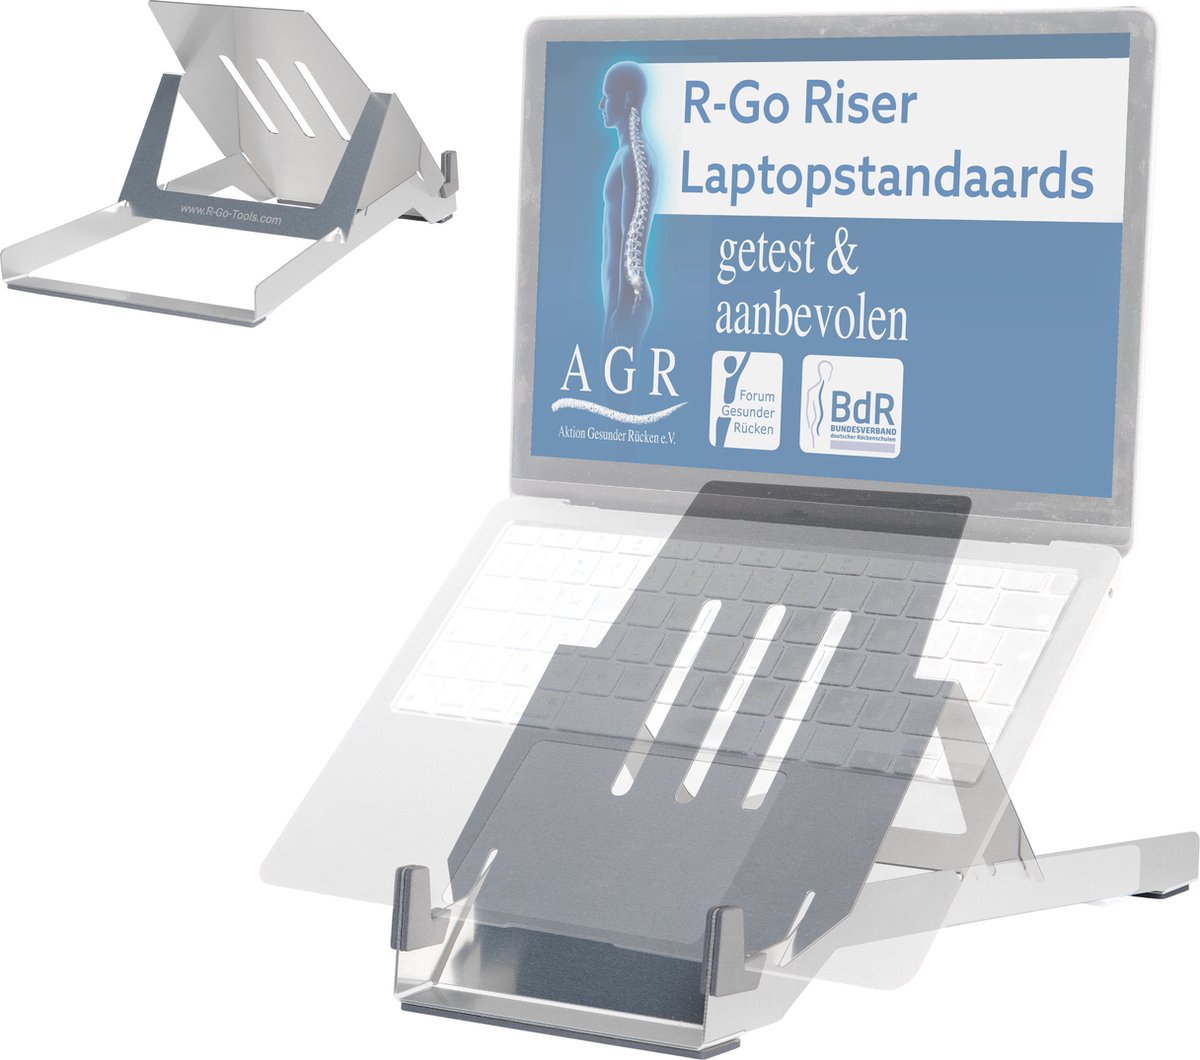 R-Go Riser Basic laptop stand, ergonomic folding and adjustable laptop riser, AGR certified,lLightweight Hylite aluminium, for 10- 22 inch laptop/MacBook, silver